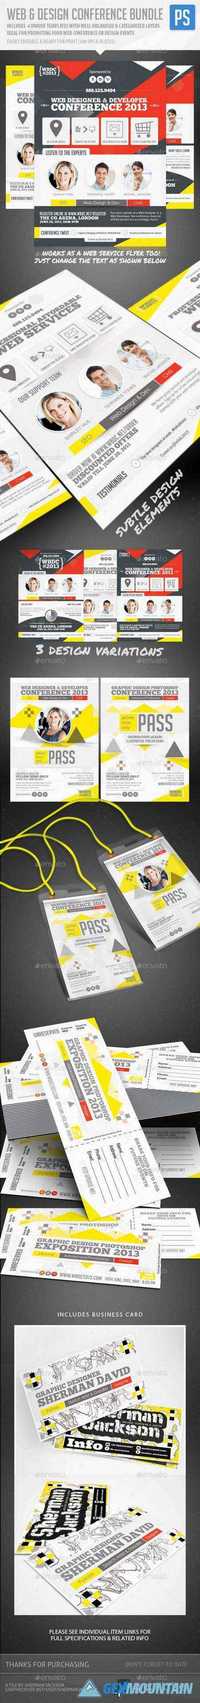 GraphicRiver - Web & Design Conference Flyer, Pass & Badge Bundle 12807905